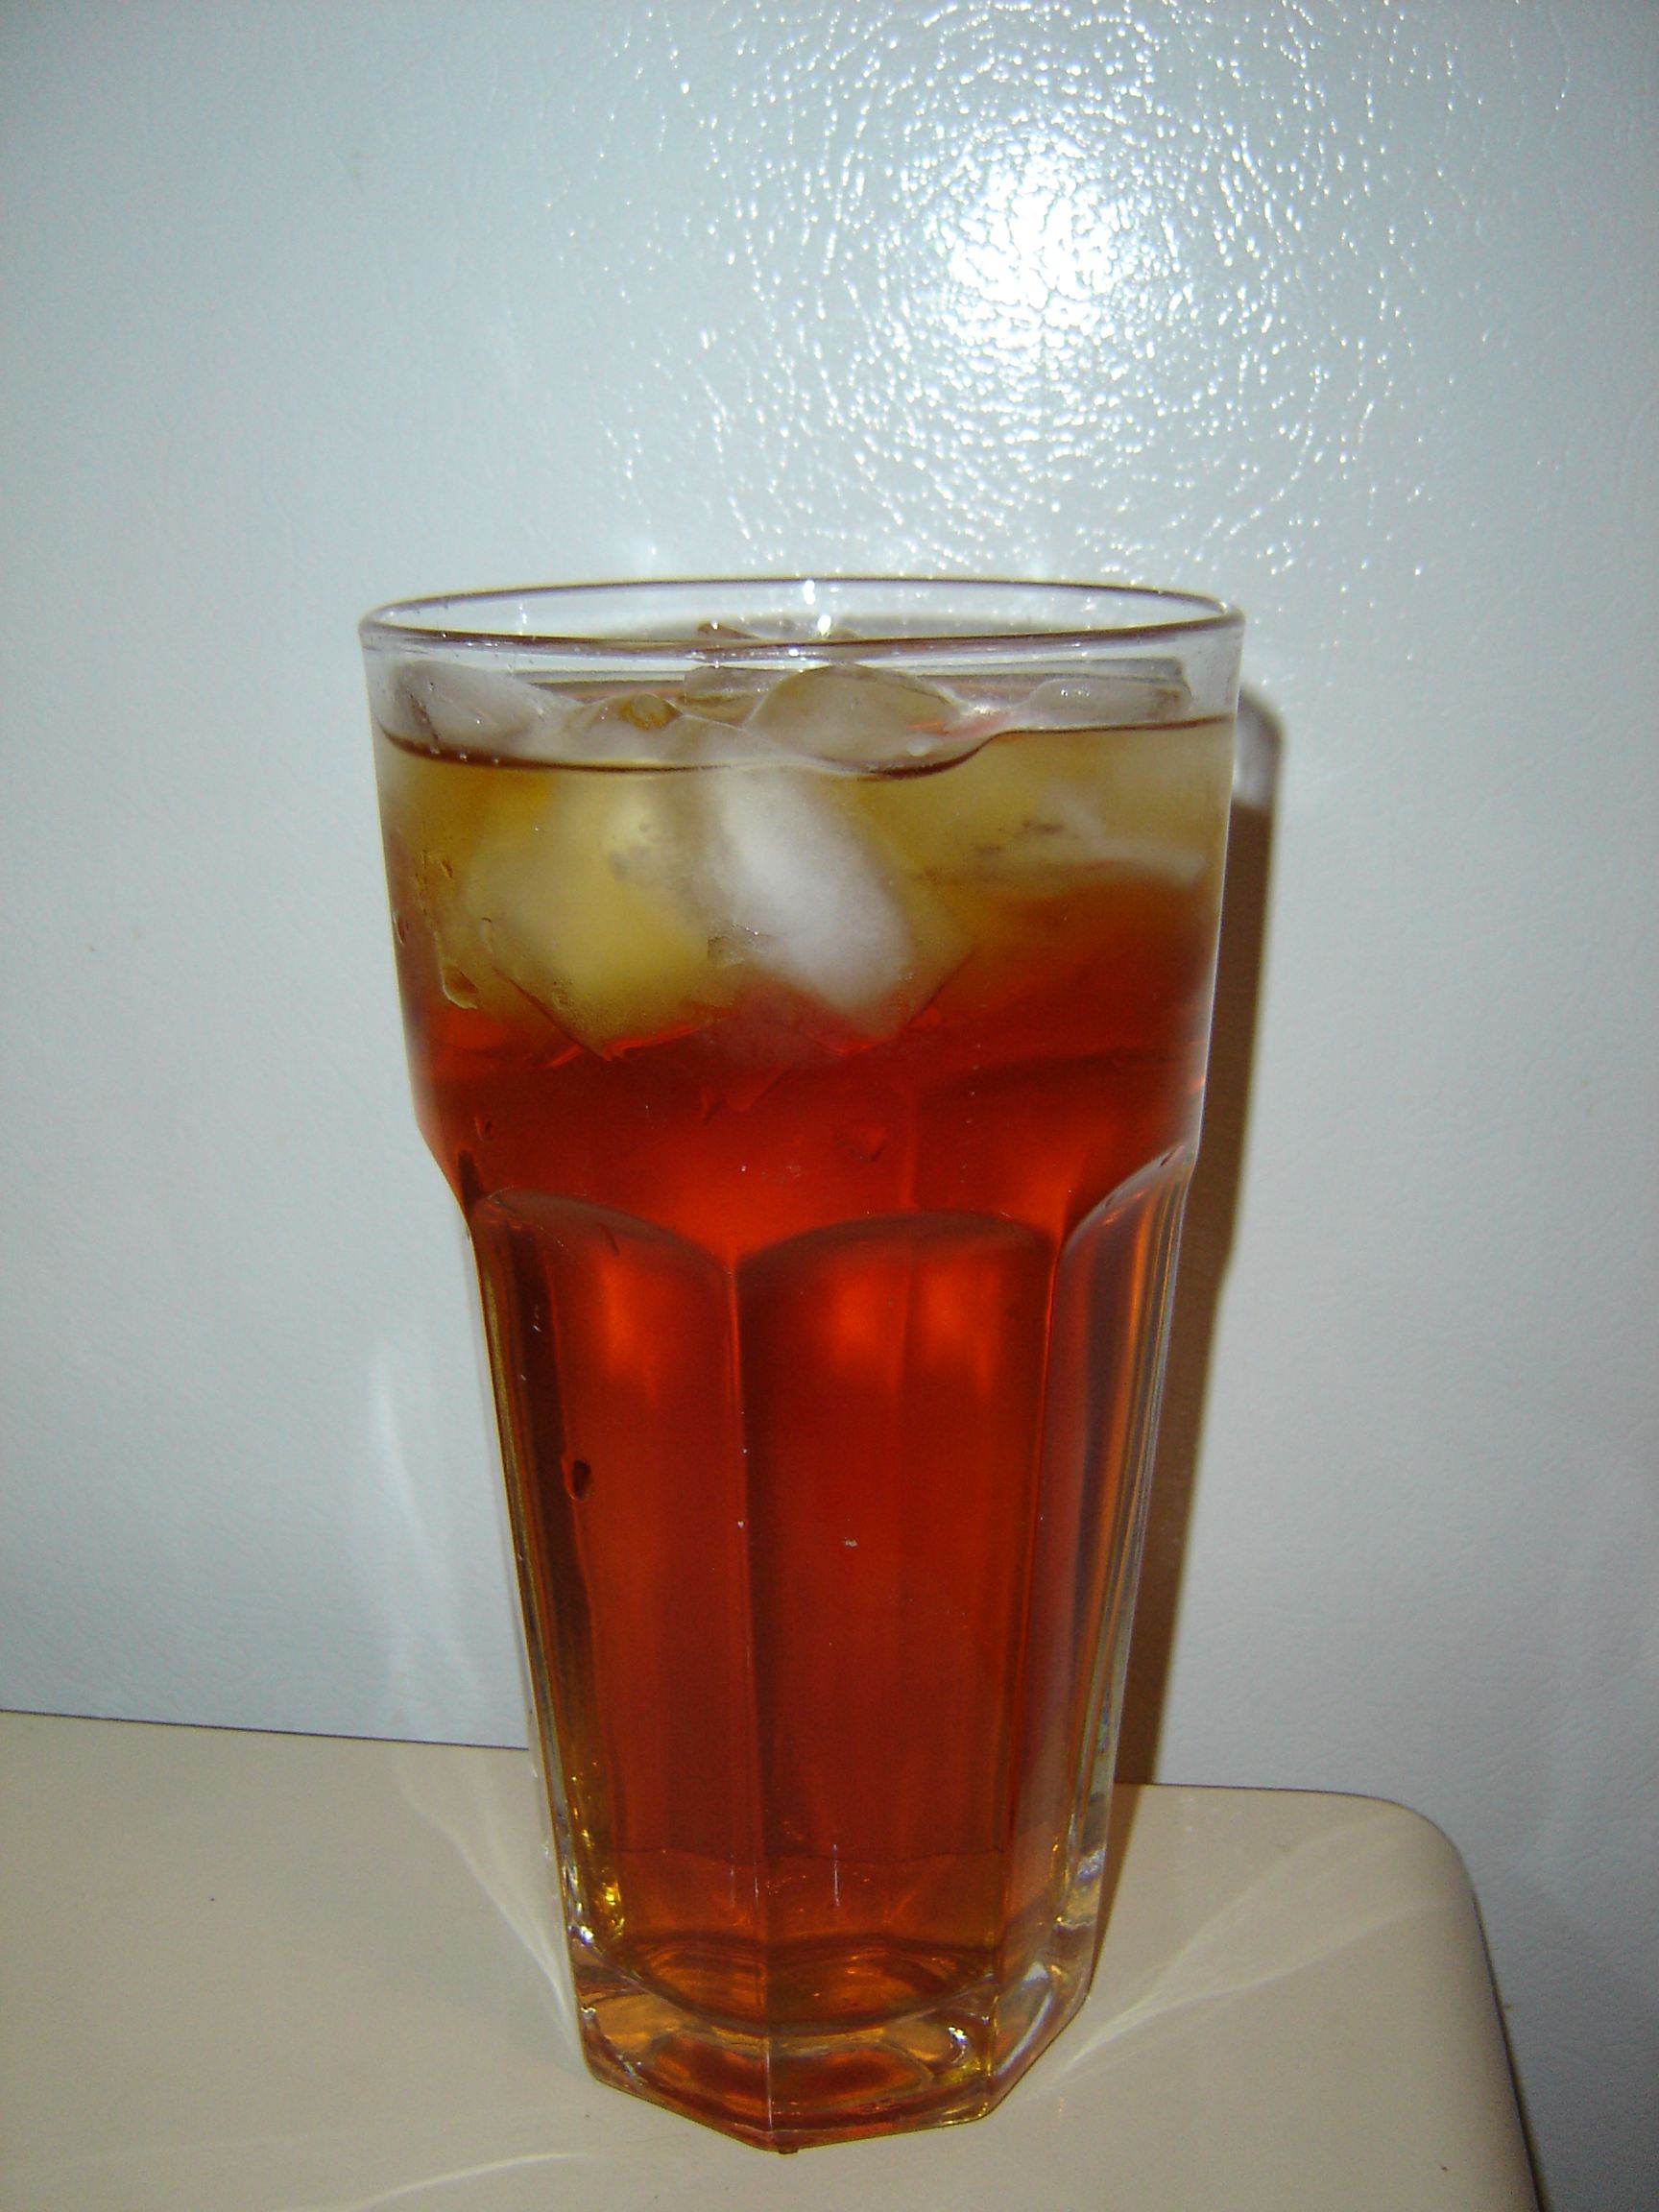 File:Glass of Iced Tea.jpg